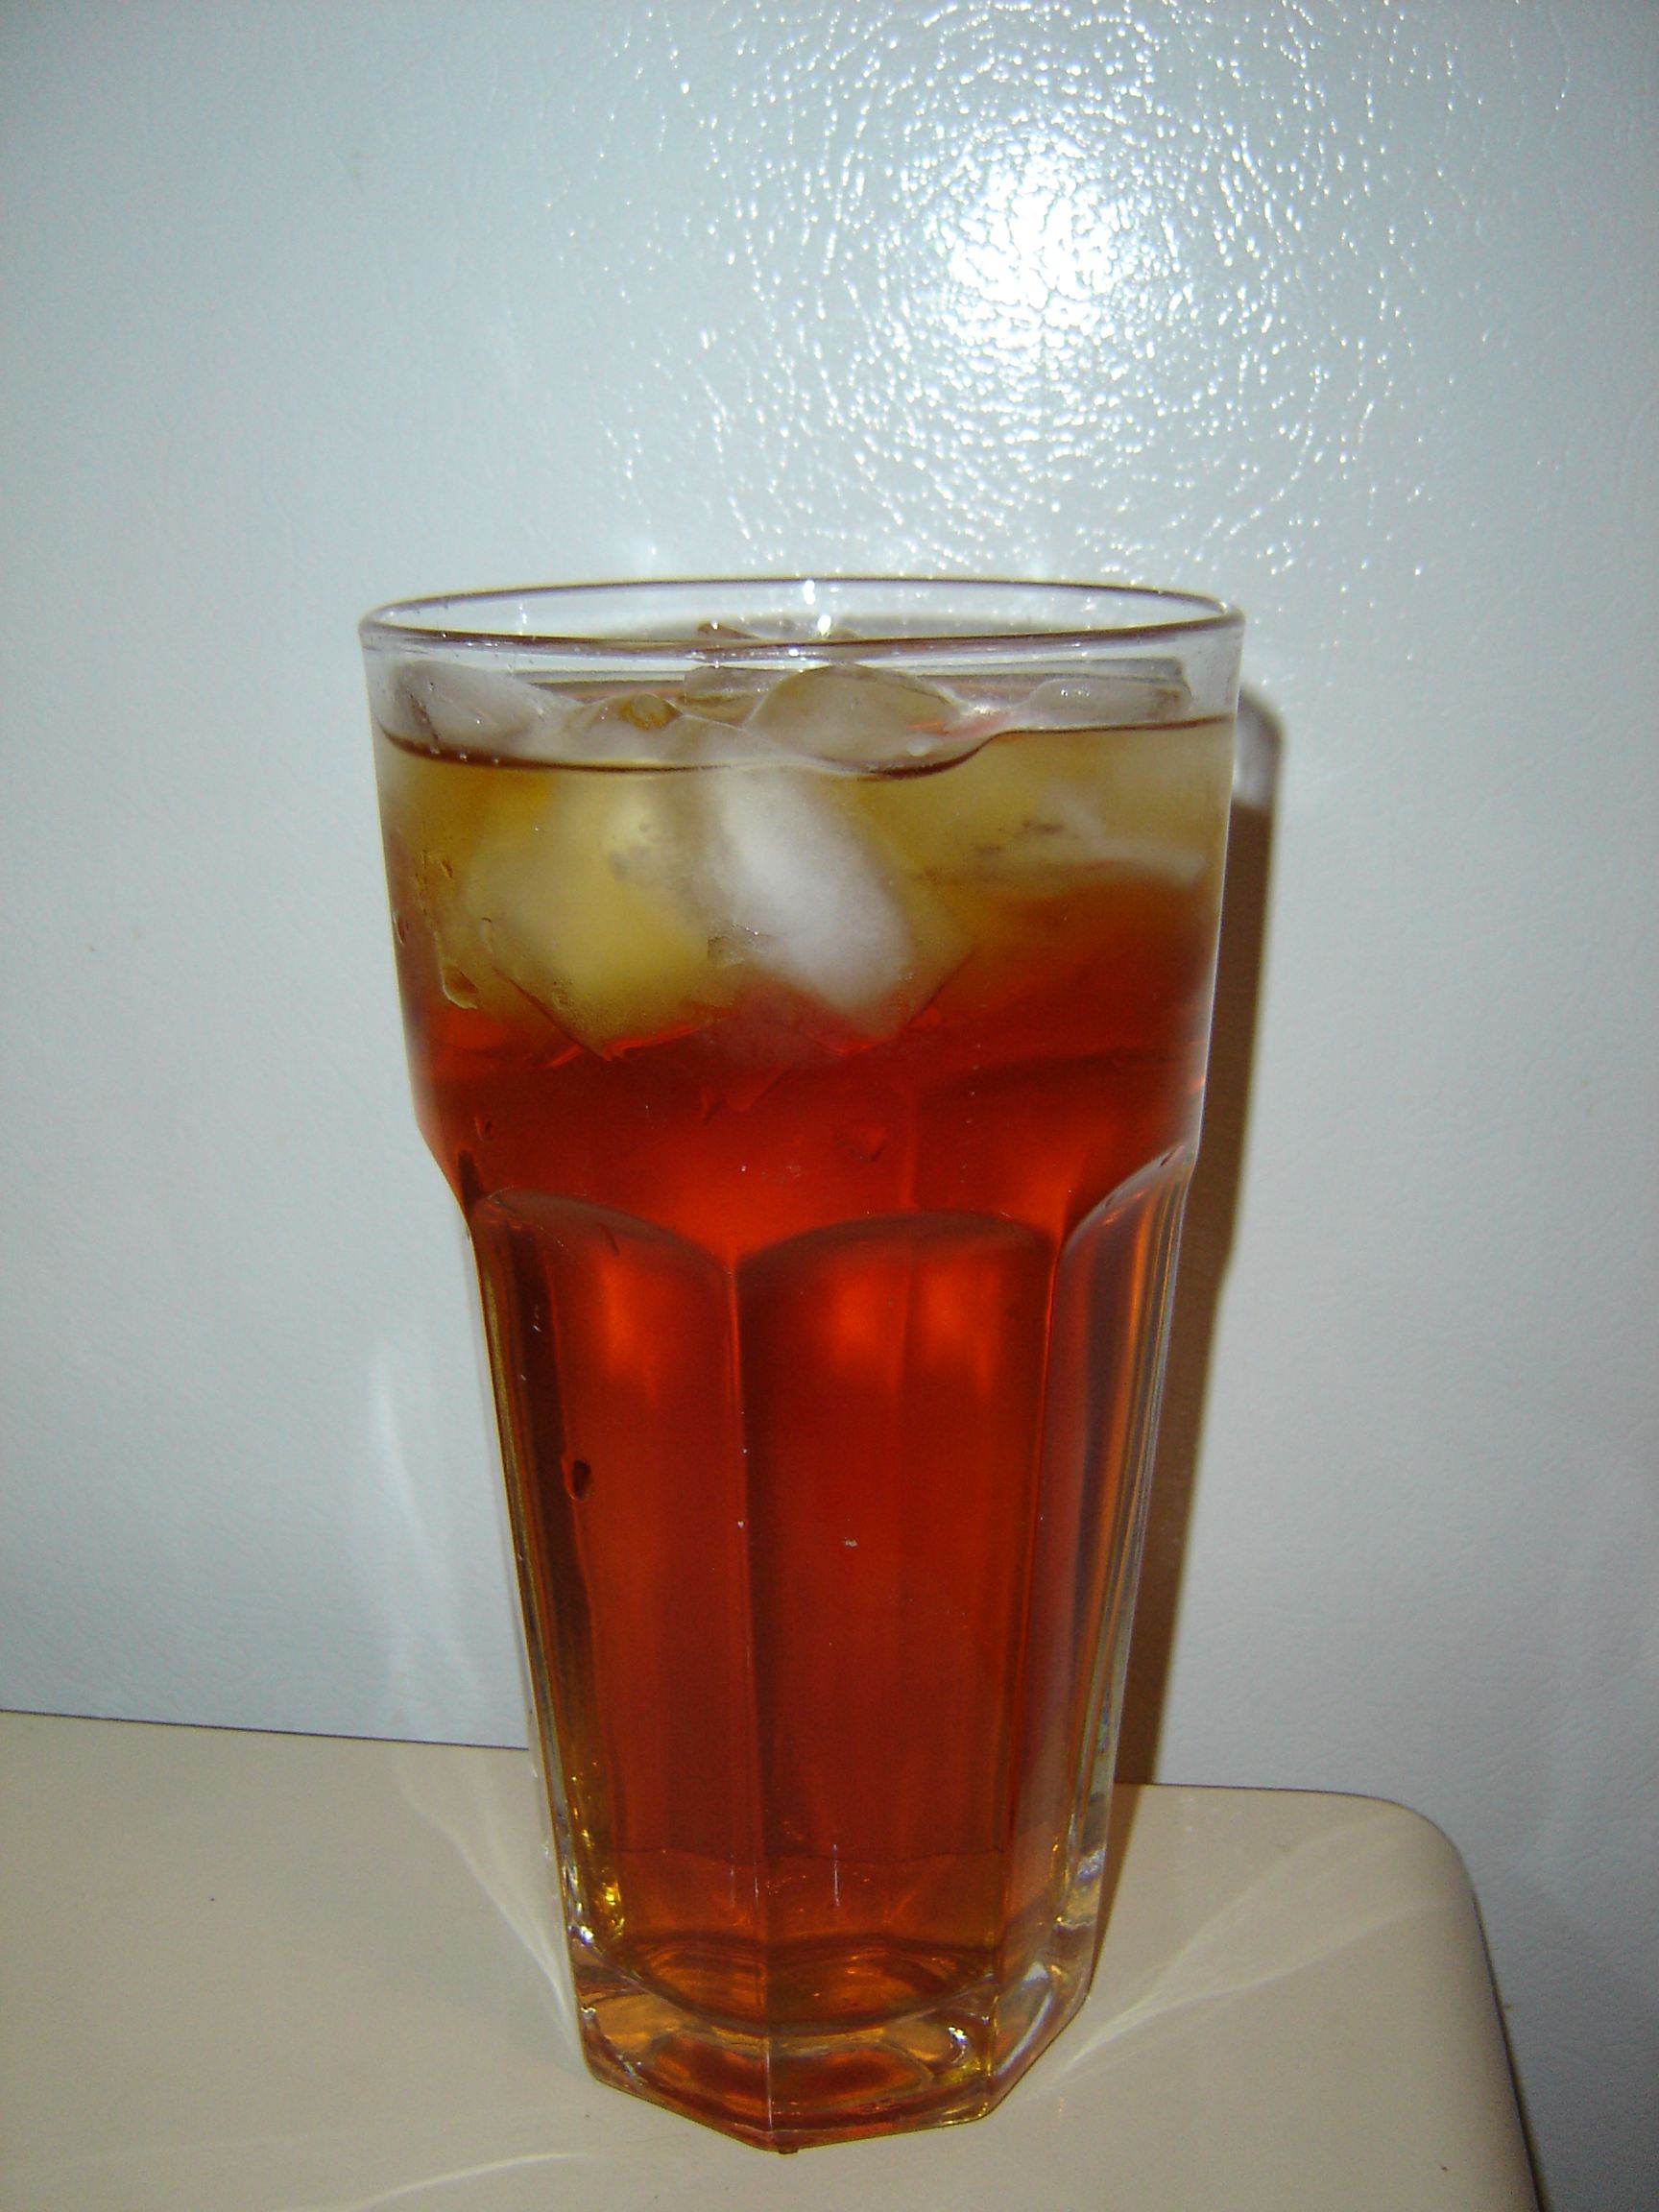 File:Glass of Iced Tea.jpg